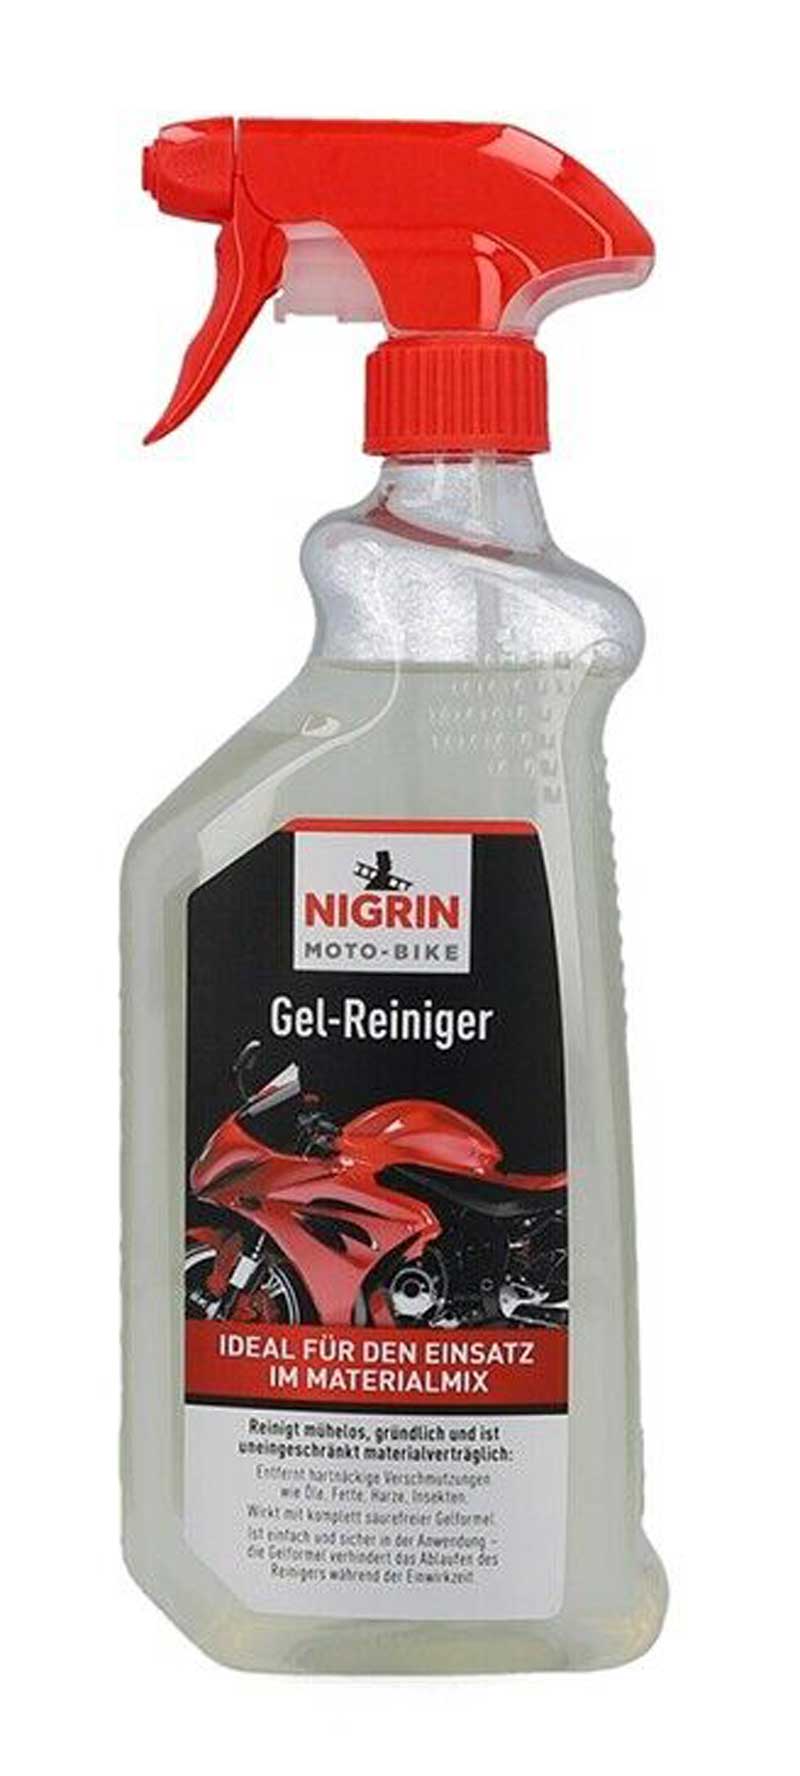 NIGRIN MOTO-BIKE Gel-Reiniger Motorrad 750ml 20615